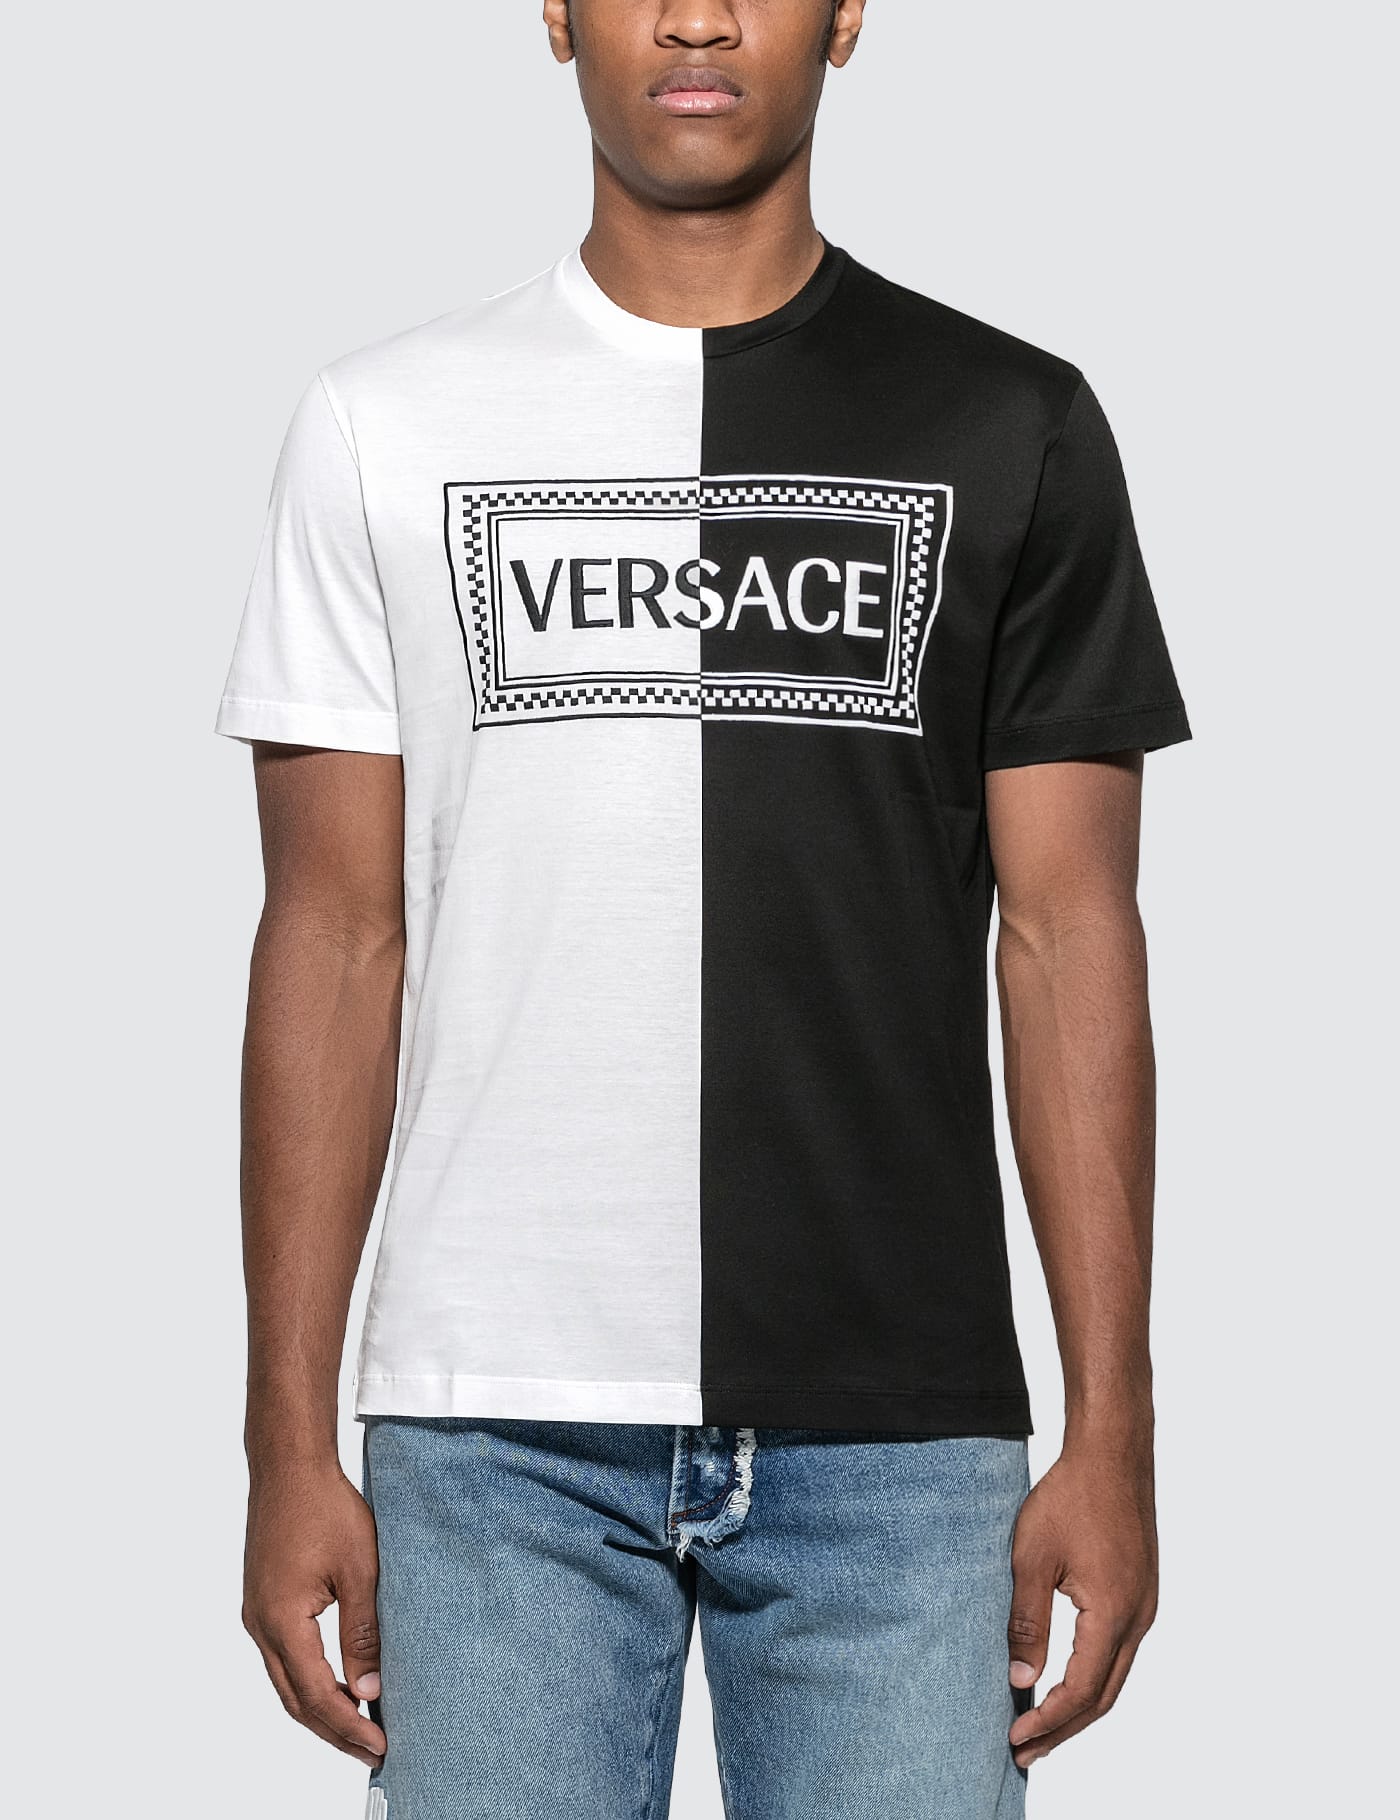 versace black and white t shirt